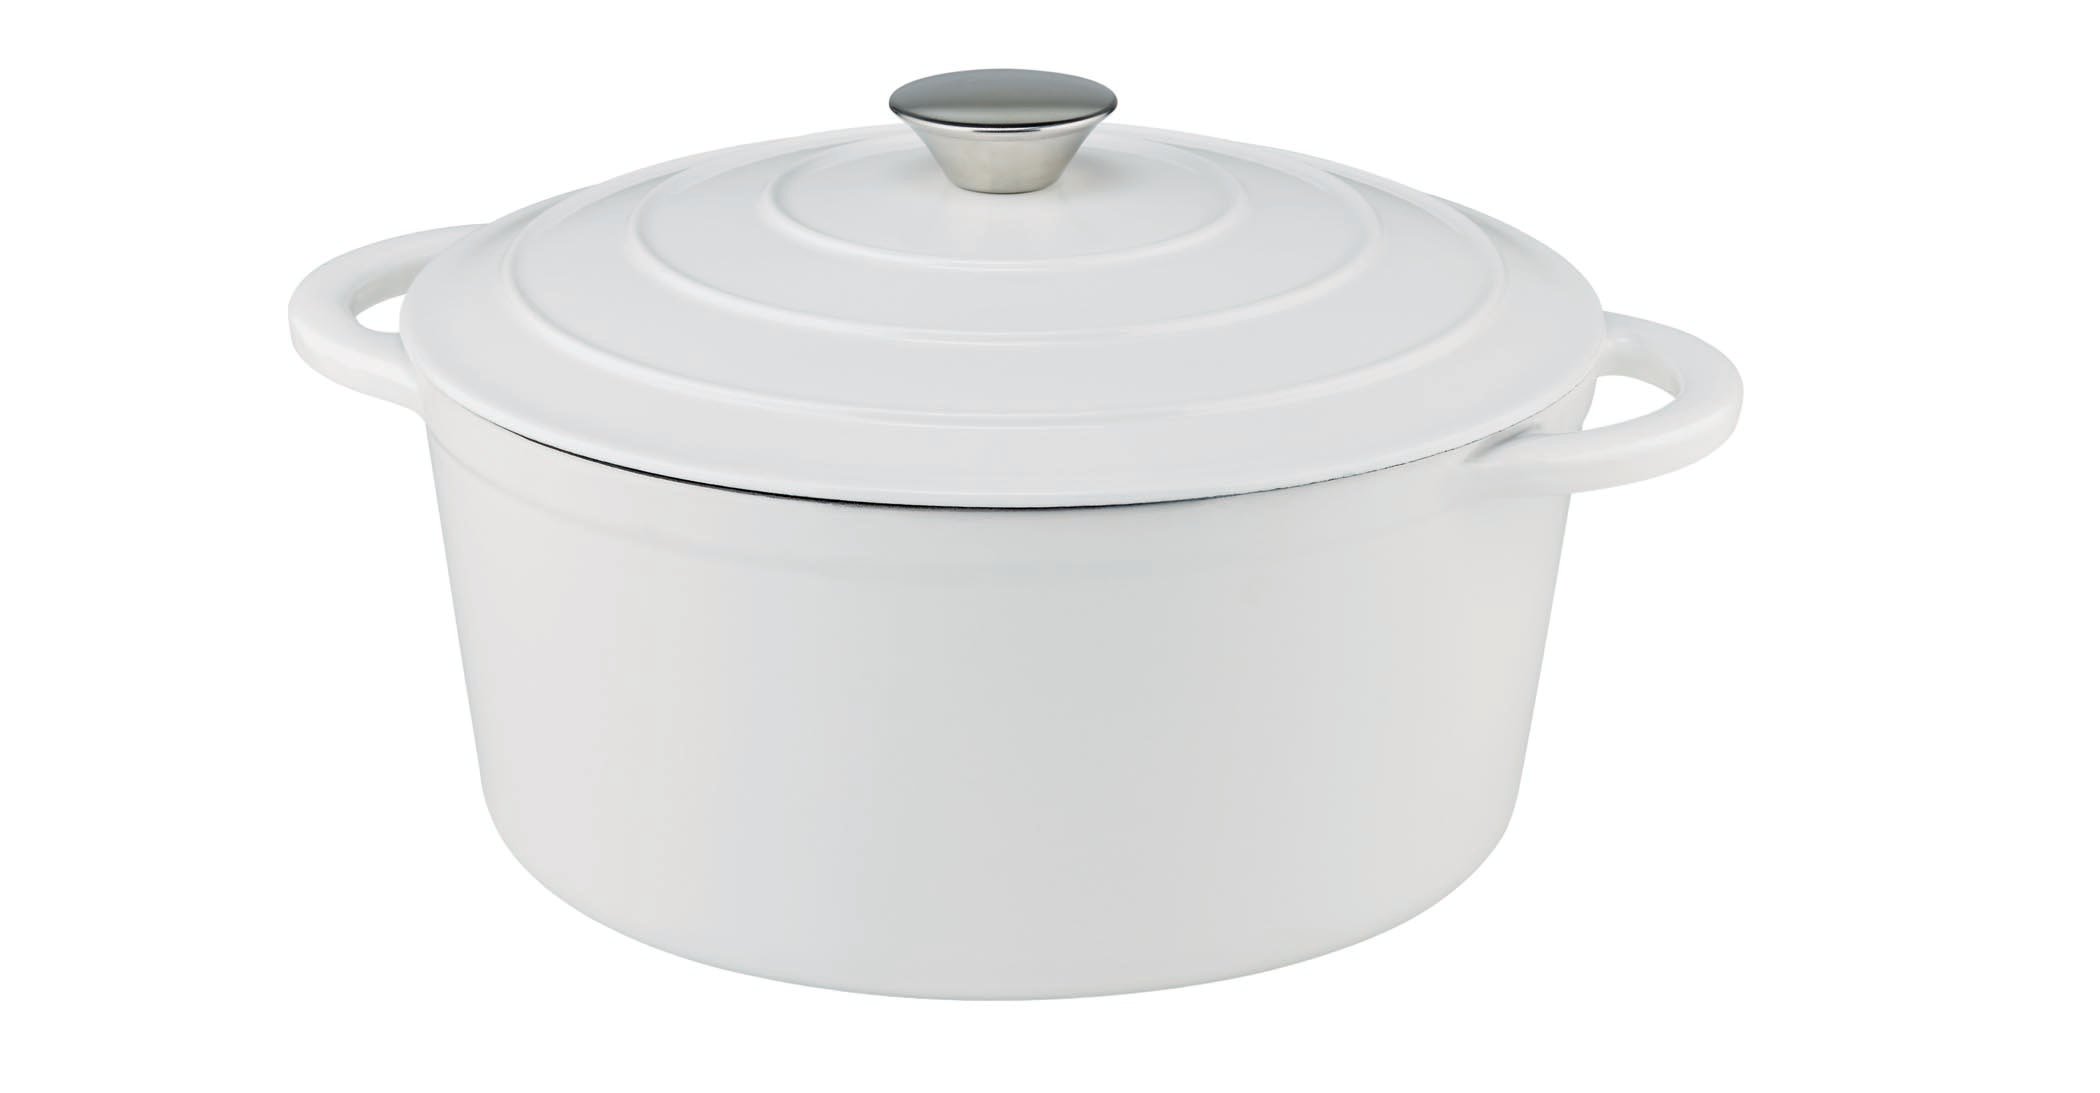 Cocinaware White Enamel Cast Iron Dutch Oven, Limited Edition - Shop ...